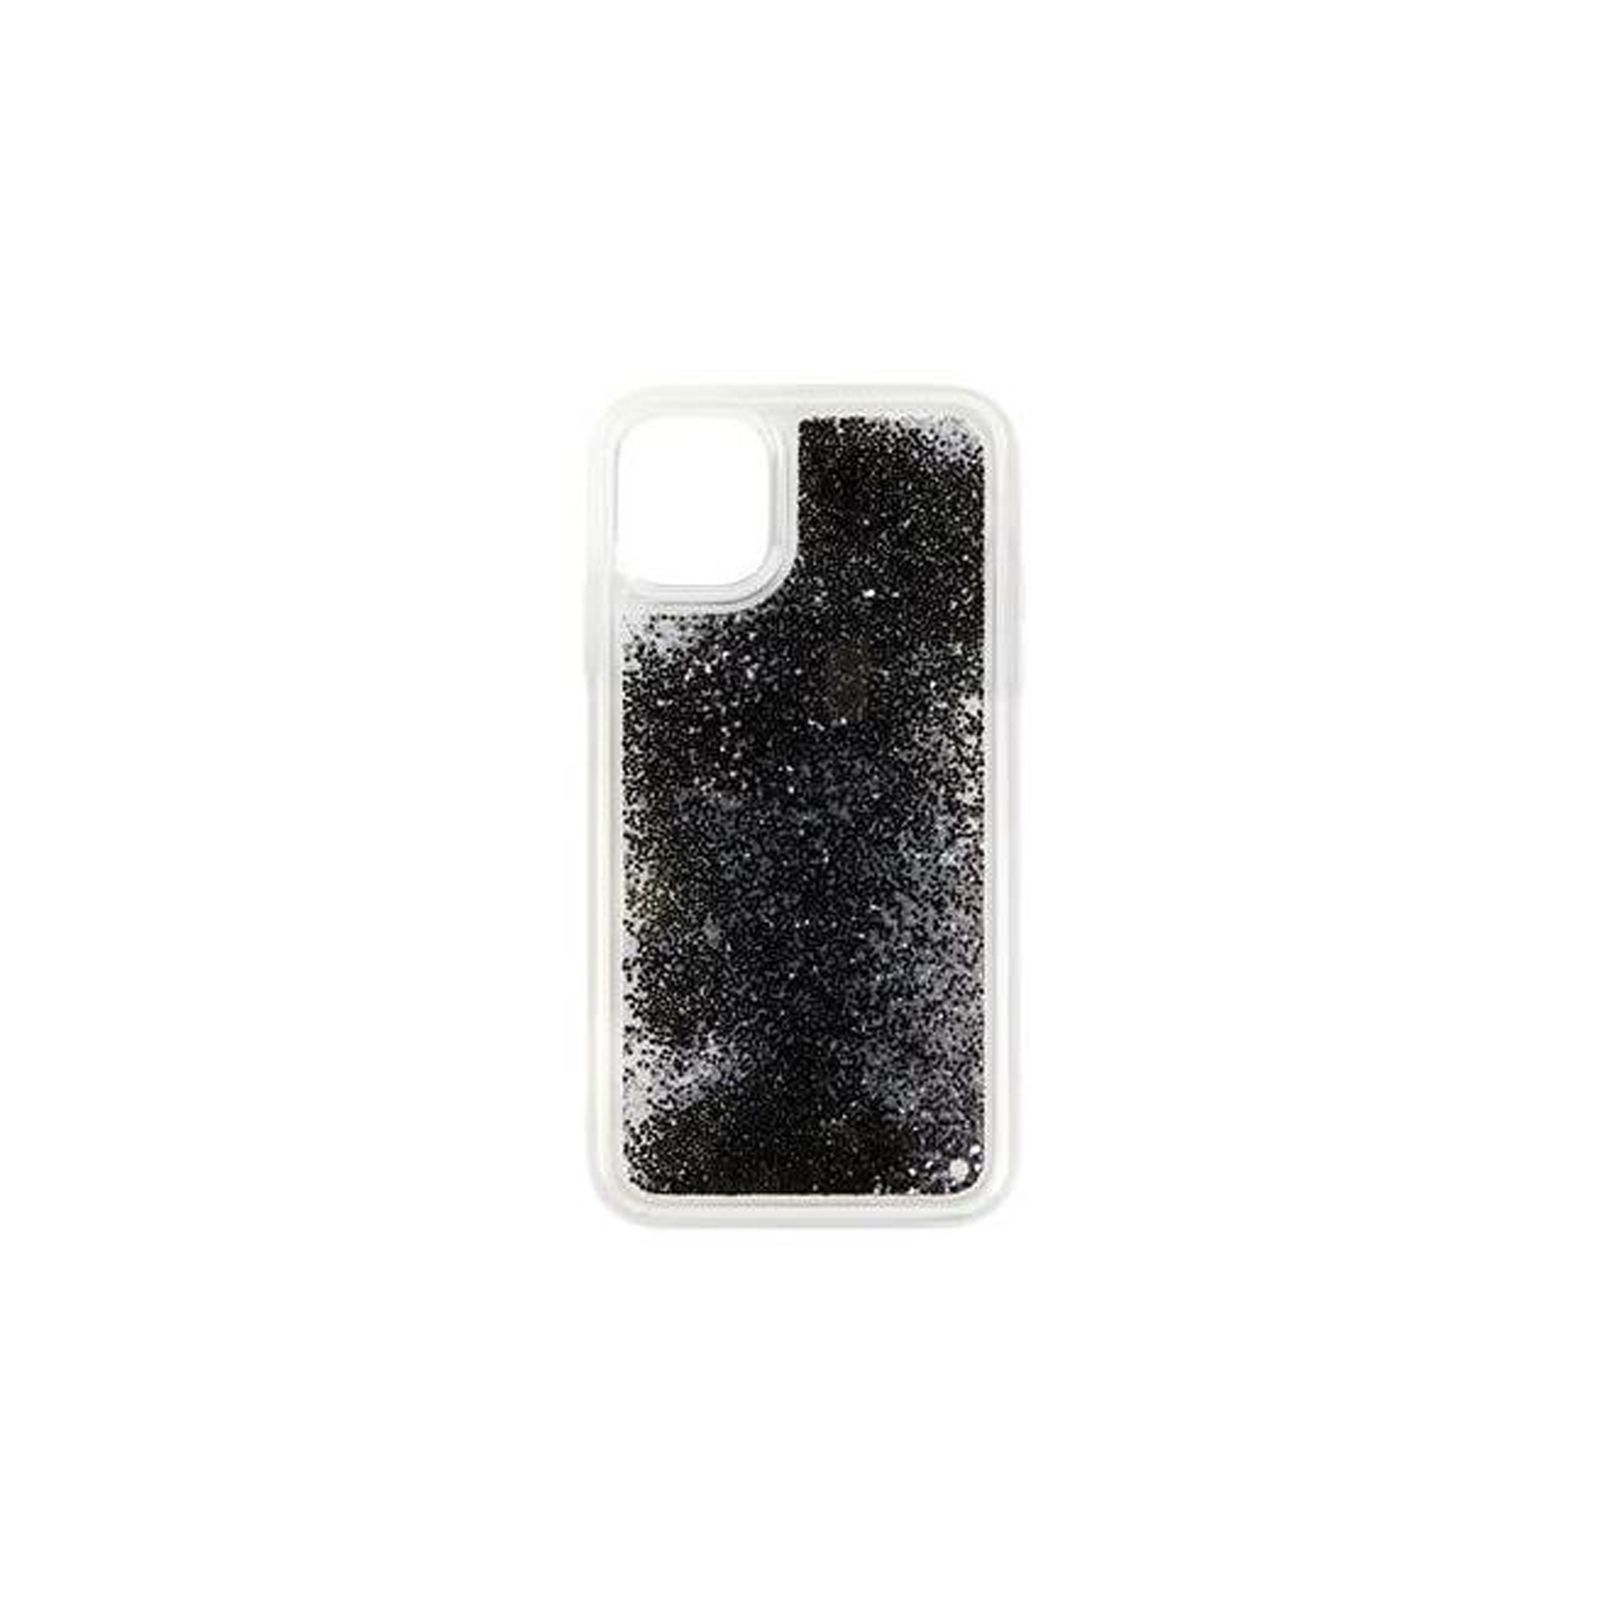 DHC Case iPhone 12 Mini Glitter - Brand New